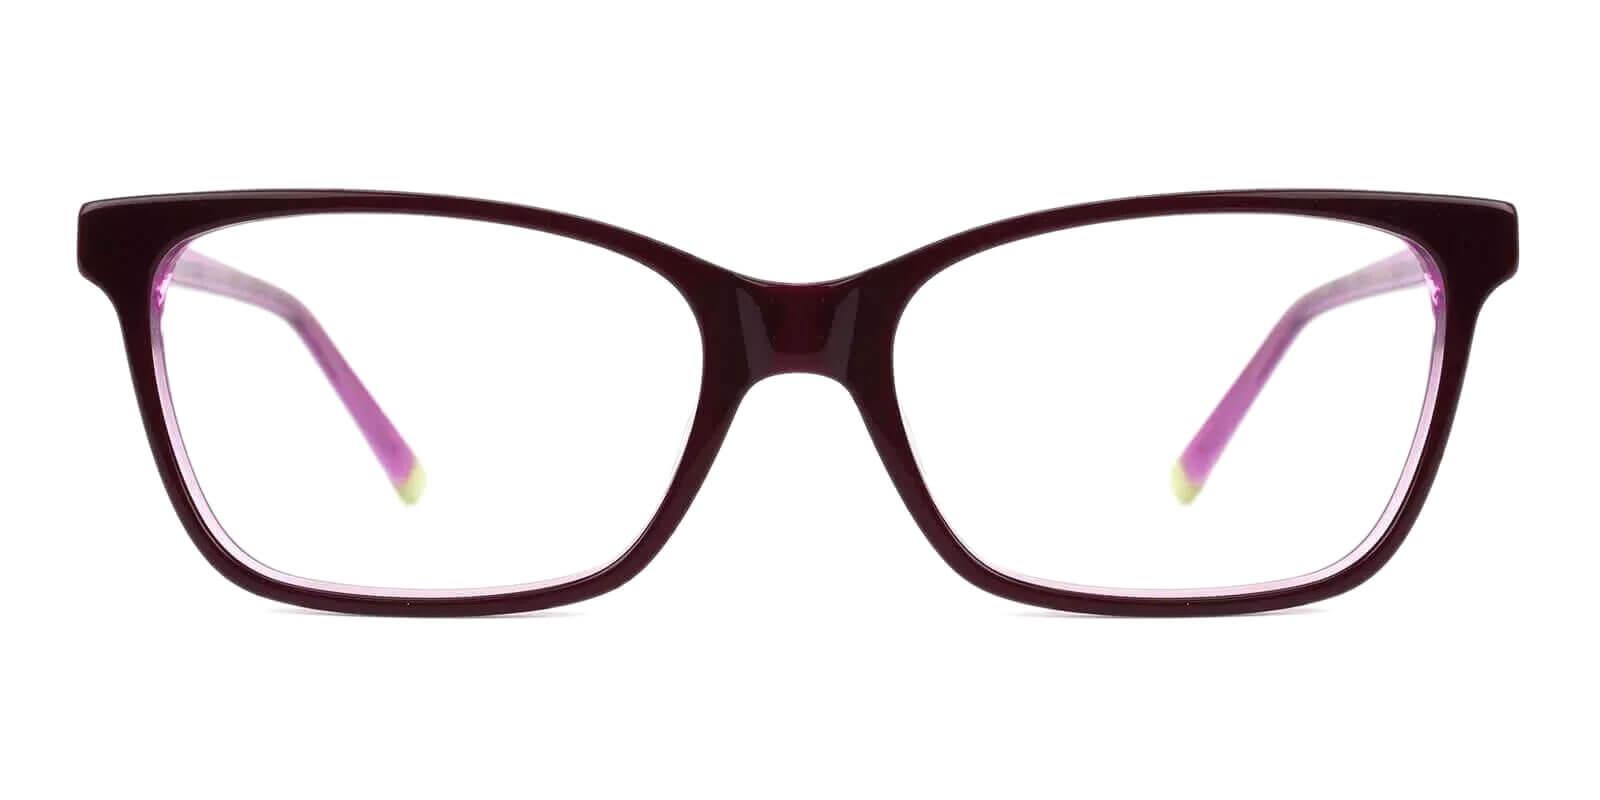 RingGold Purple Acetate Eyeglasses , SpringHinges , UniversalBridgeFit Frames from ABBE Glasses